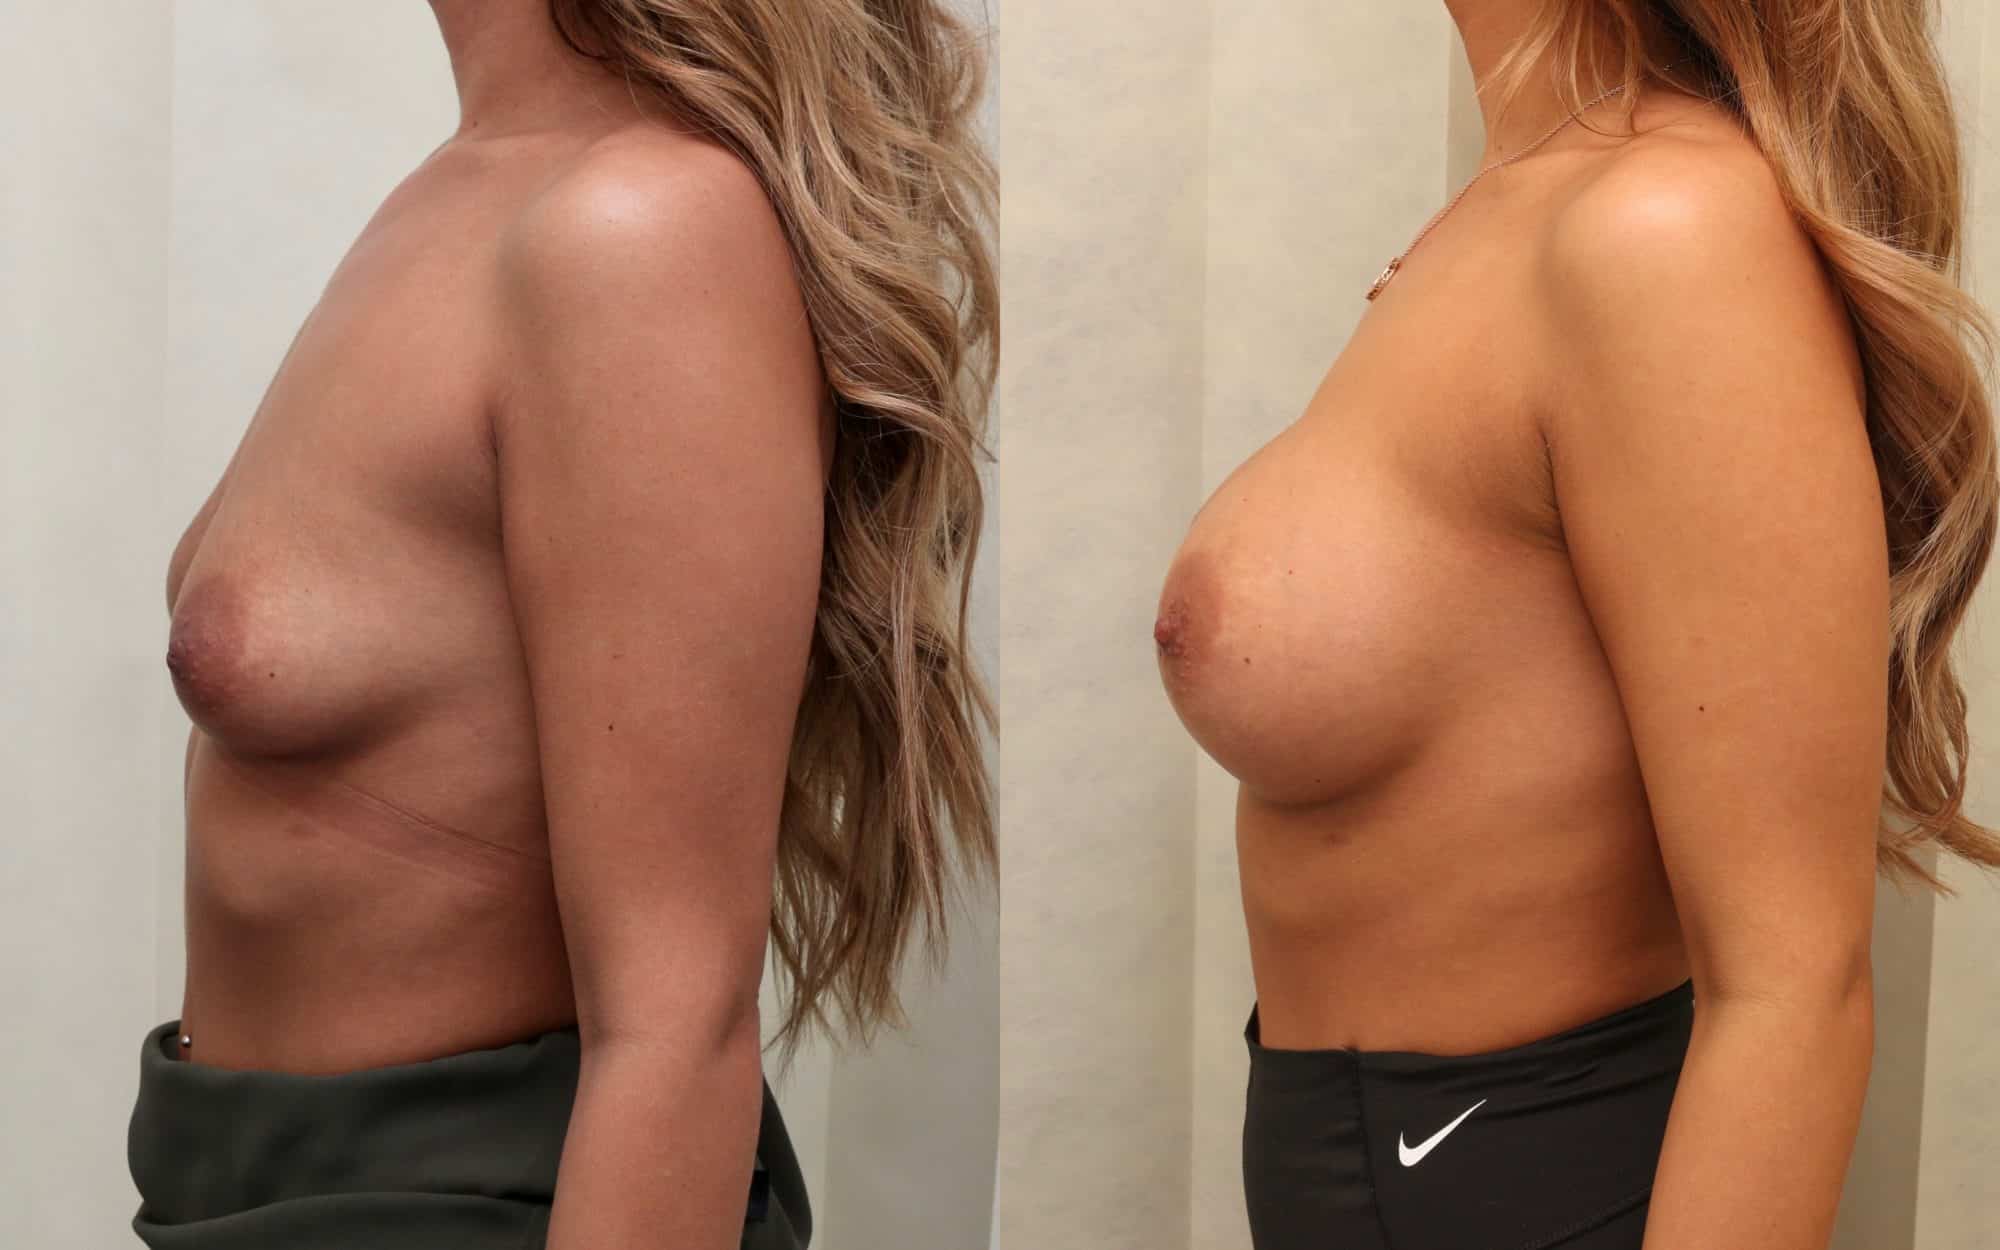 B to E/F cup breast augmentation